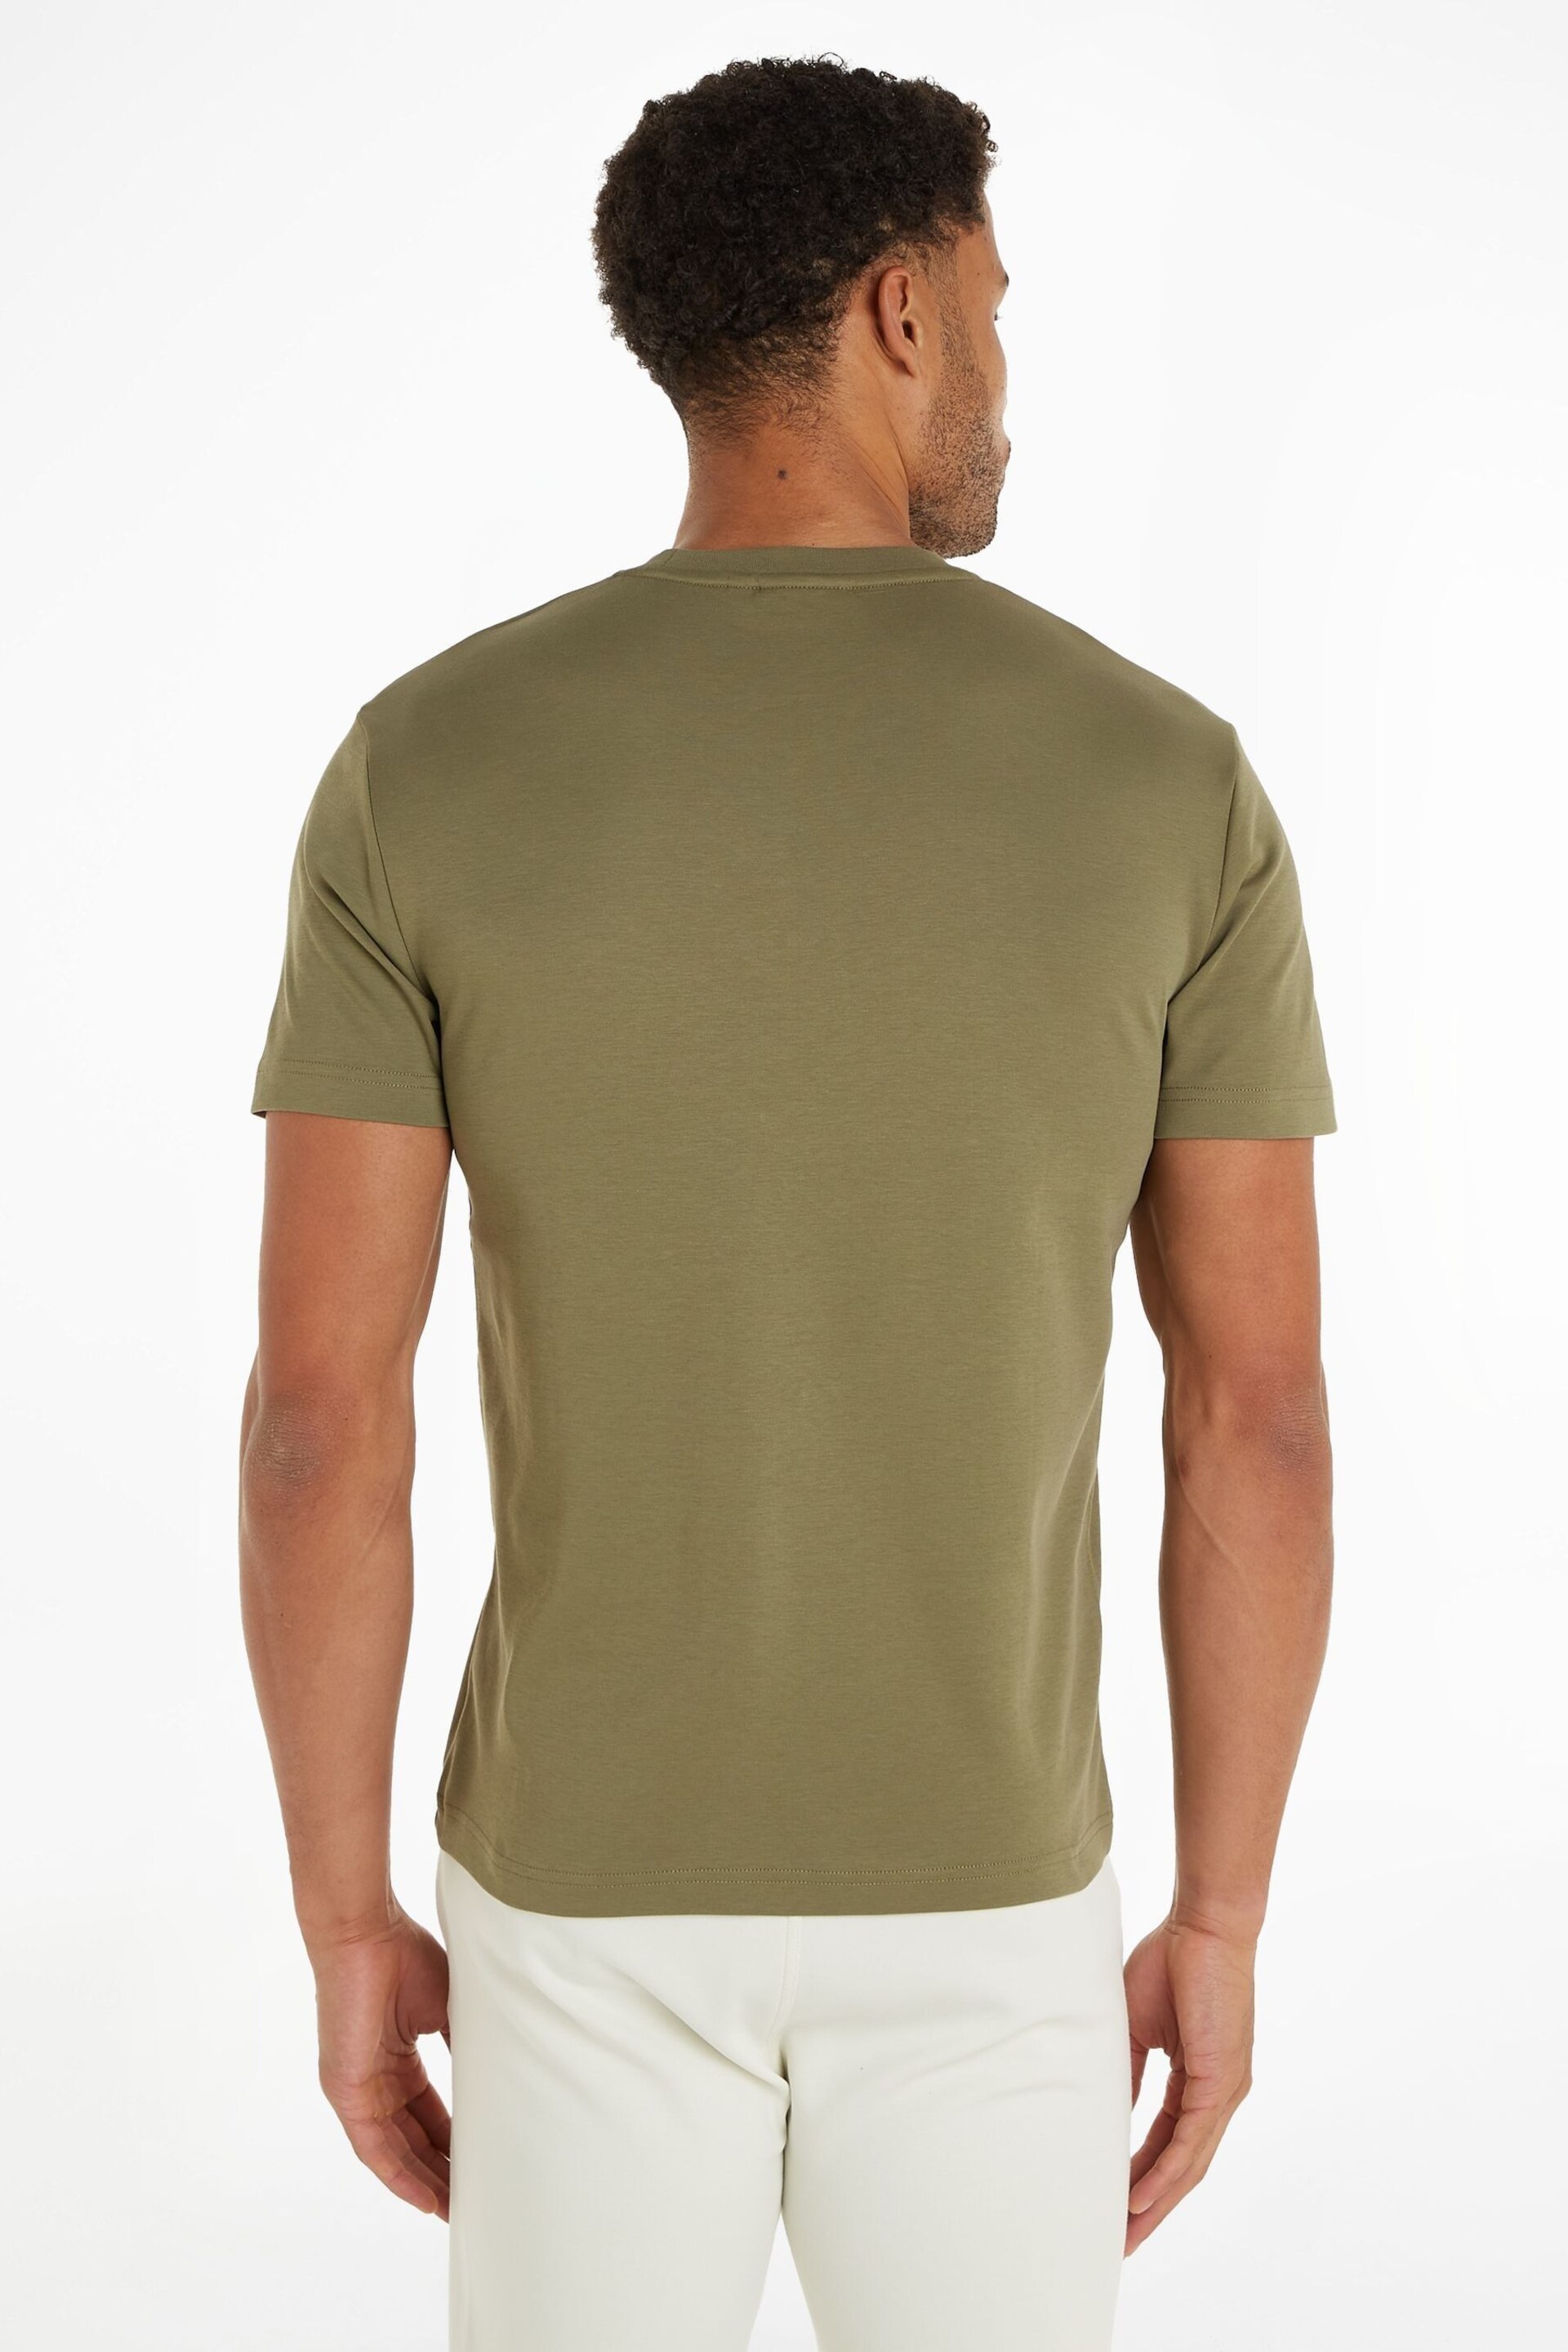 Calvin Klein Green Logo Interlock T-Shirt - Image 2 of 5